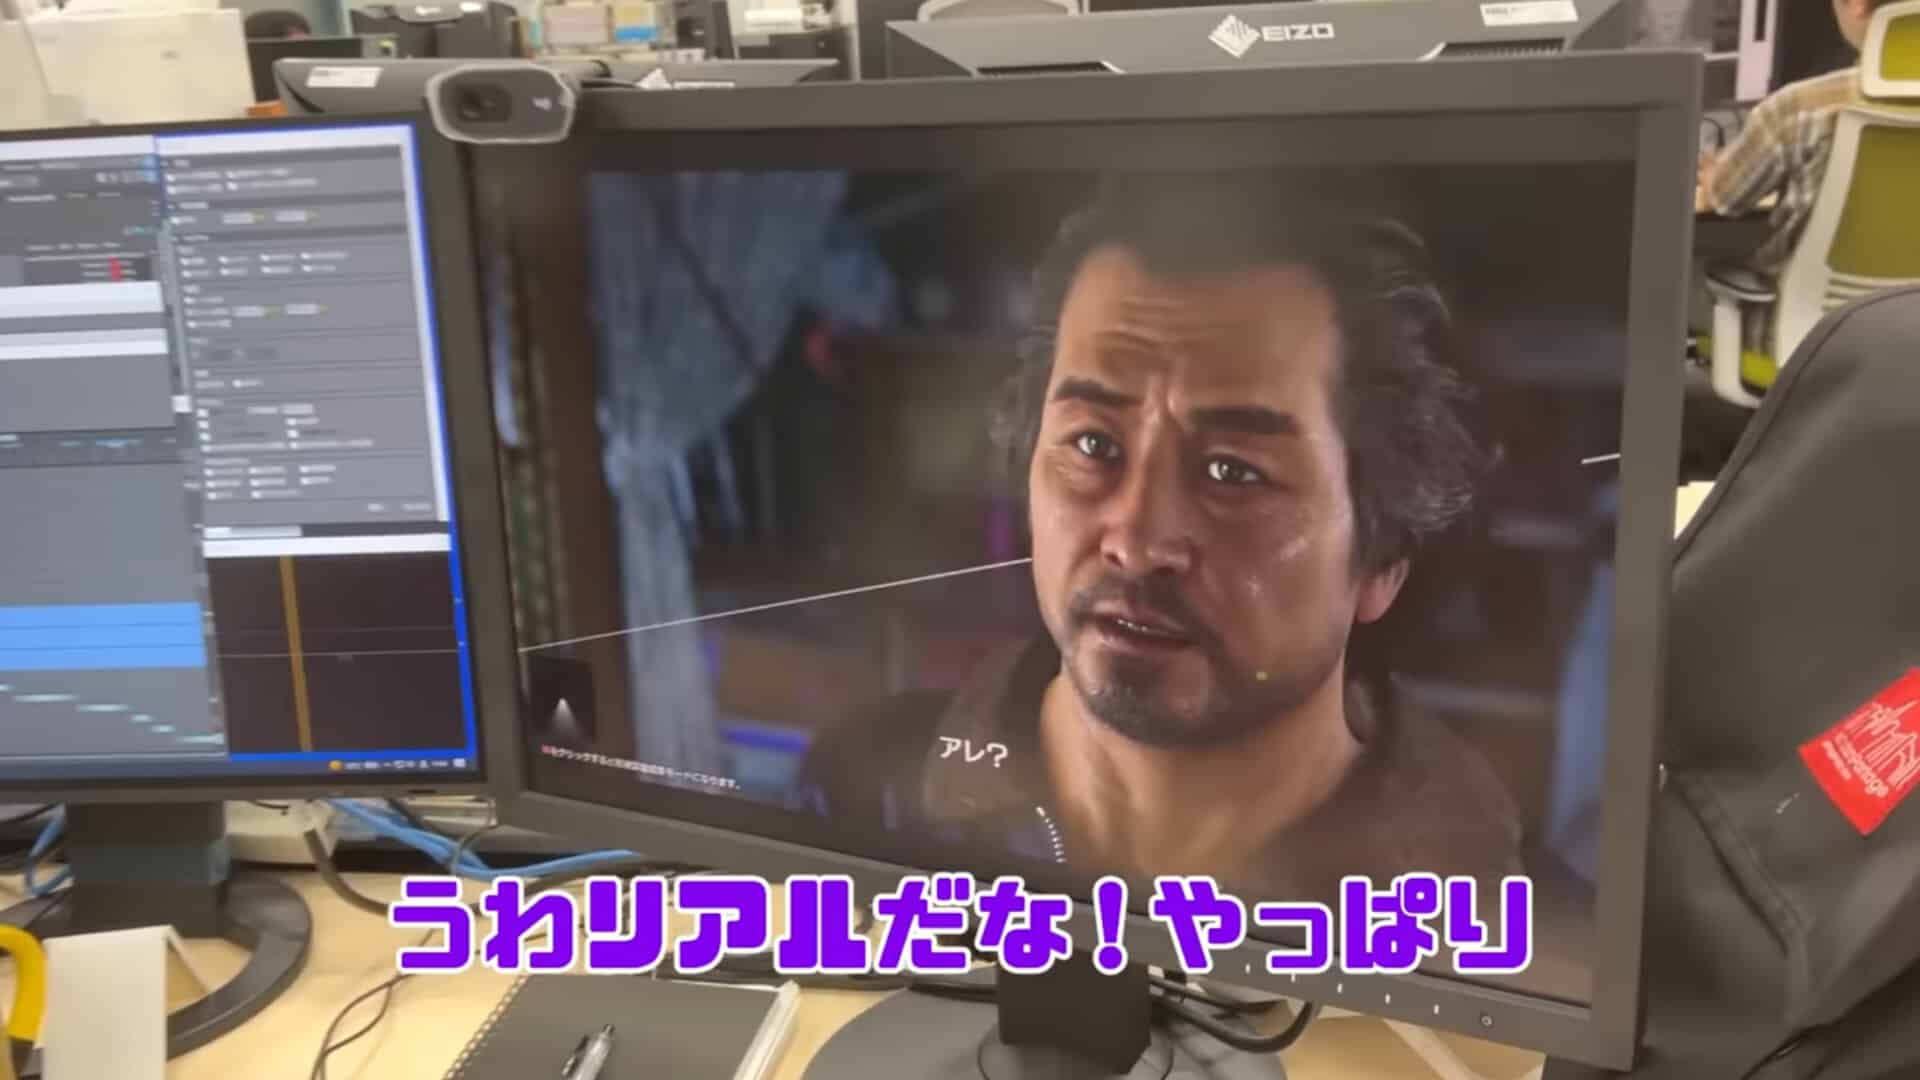 Yakuza 8 premières images captures d'écran séquences RGG Studio Ryu Ga Gotoku nouvelle ville de coiffure Ichiban Kasuga Nanba Adachi retour Sega tour Mikuru Asakura